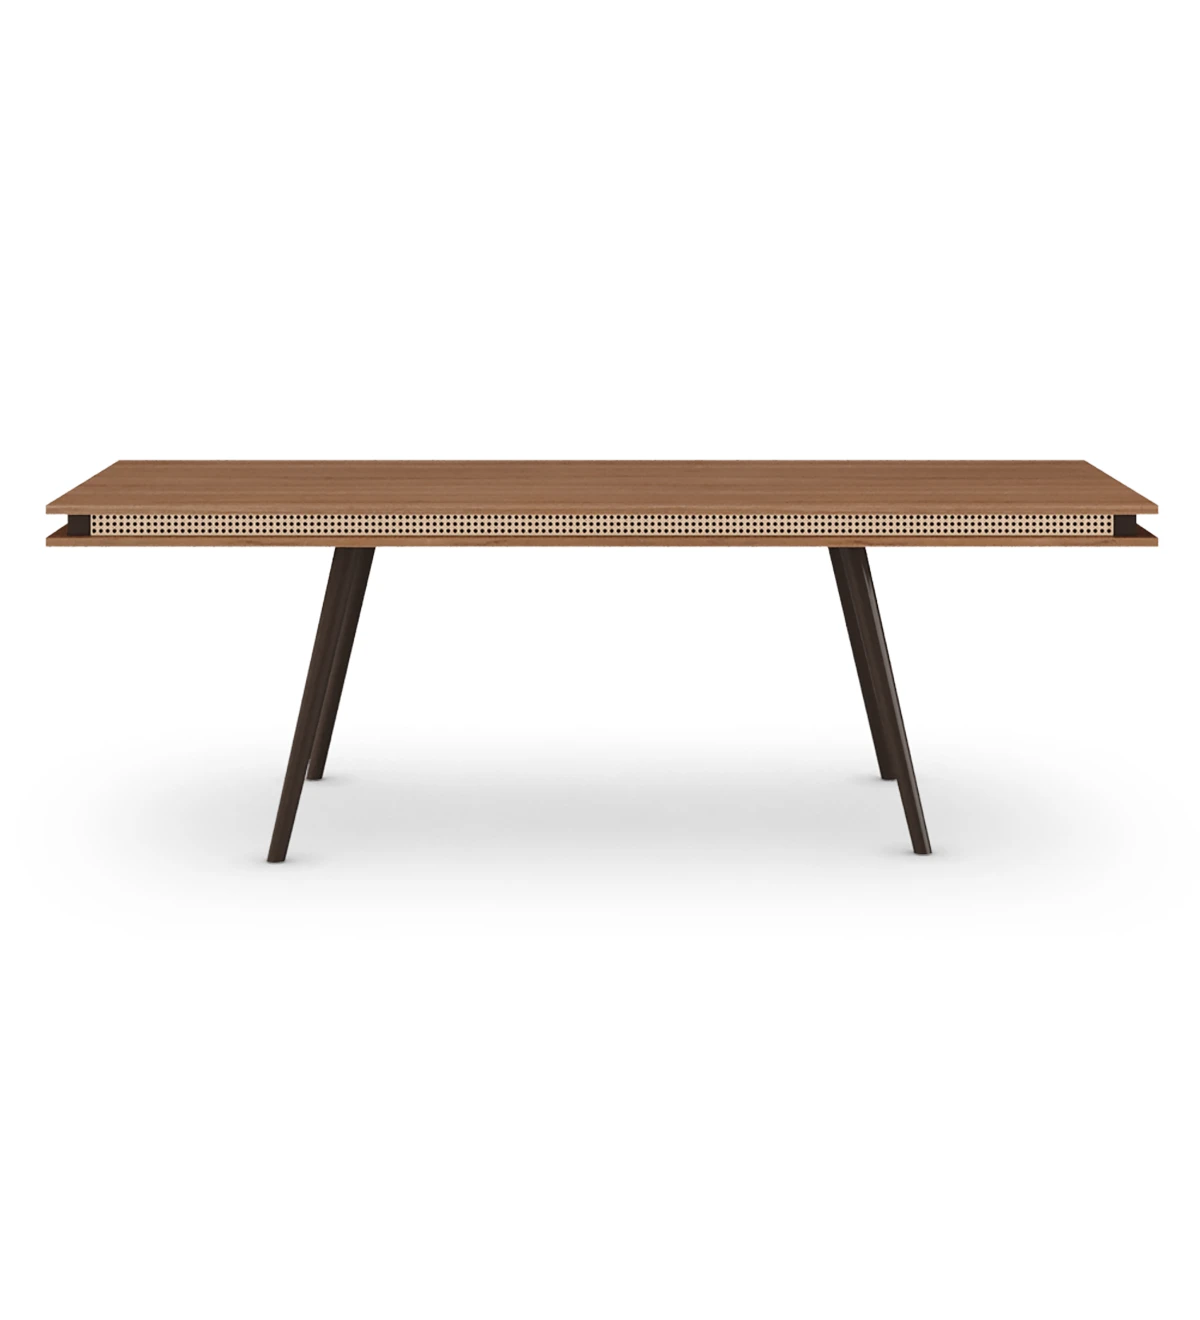 Malmo rectangular dining table 240 x 100 cm, walnut top, dark brown lacquered feet.